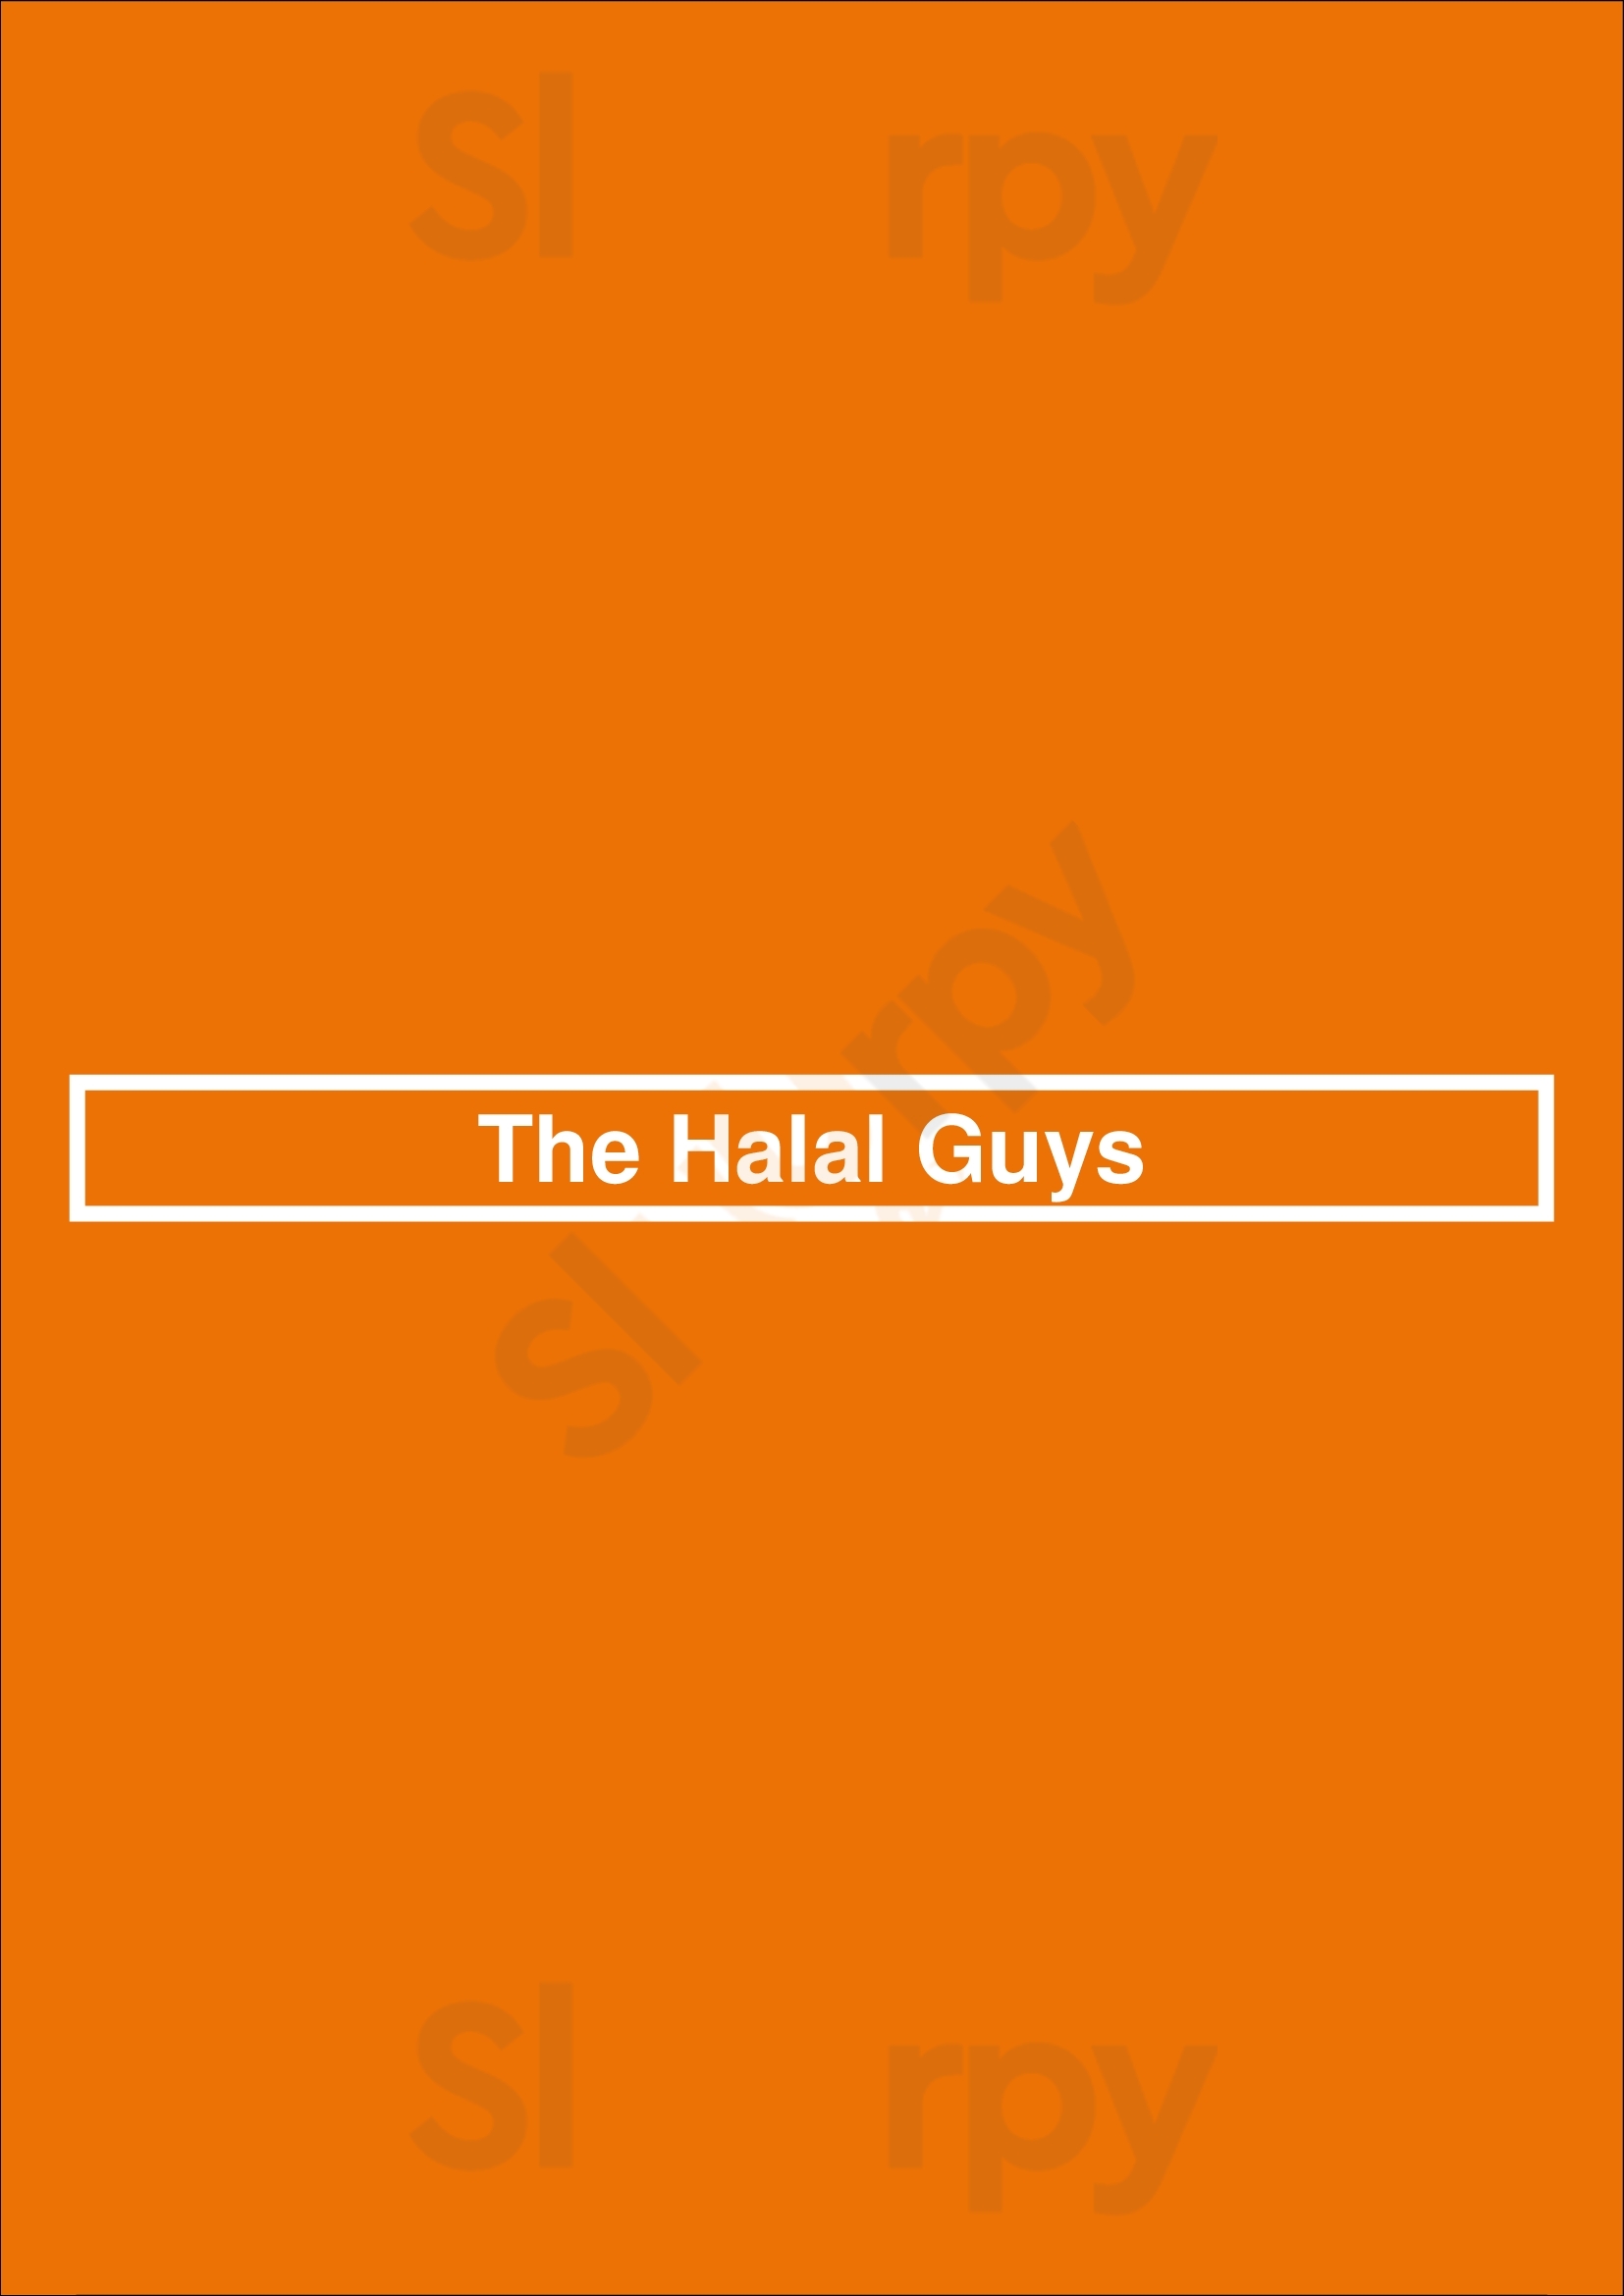 The Halal Guys Houston Menu - 1